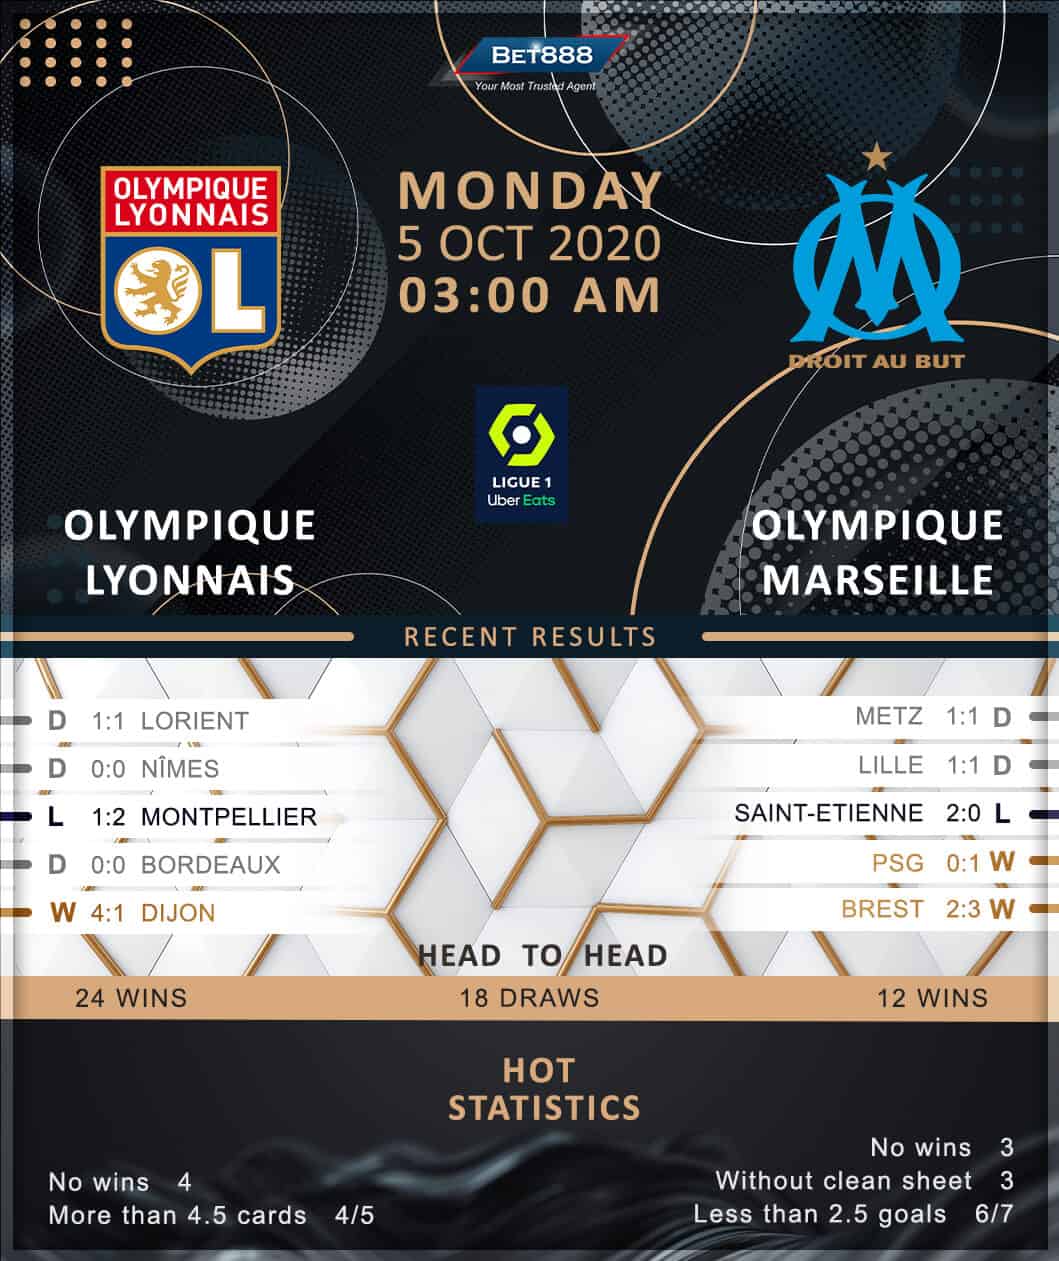 Olympique Lyonnais vs Olympique Marseille﻿ 05/10/20